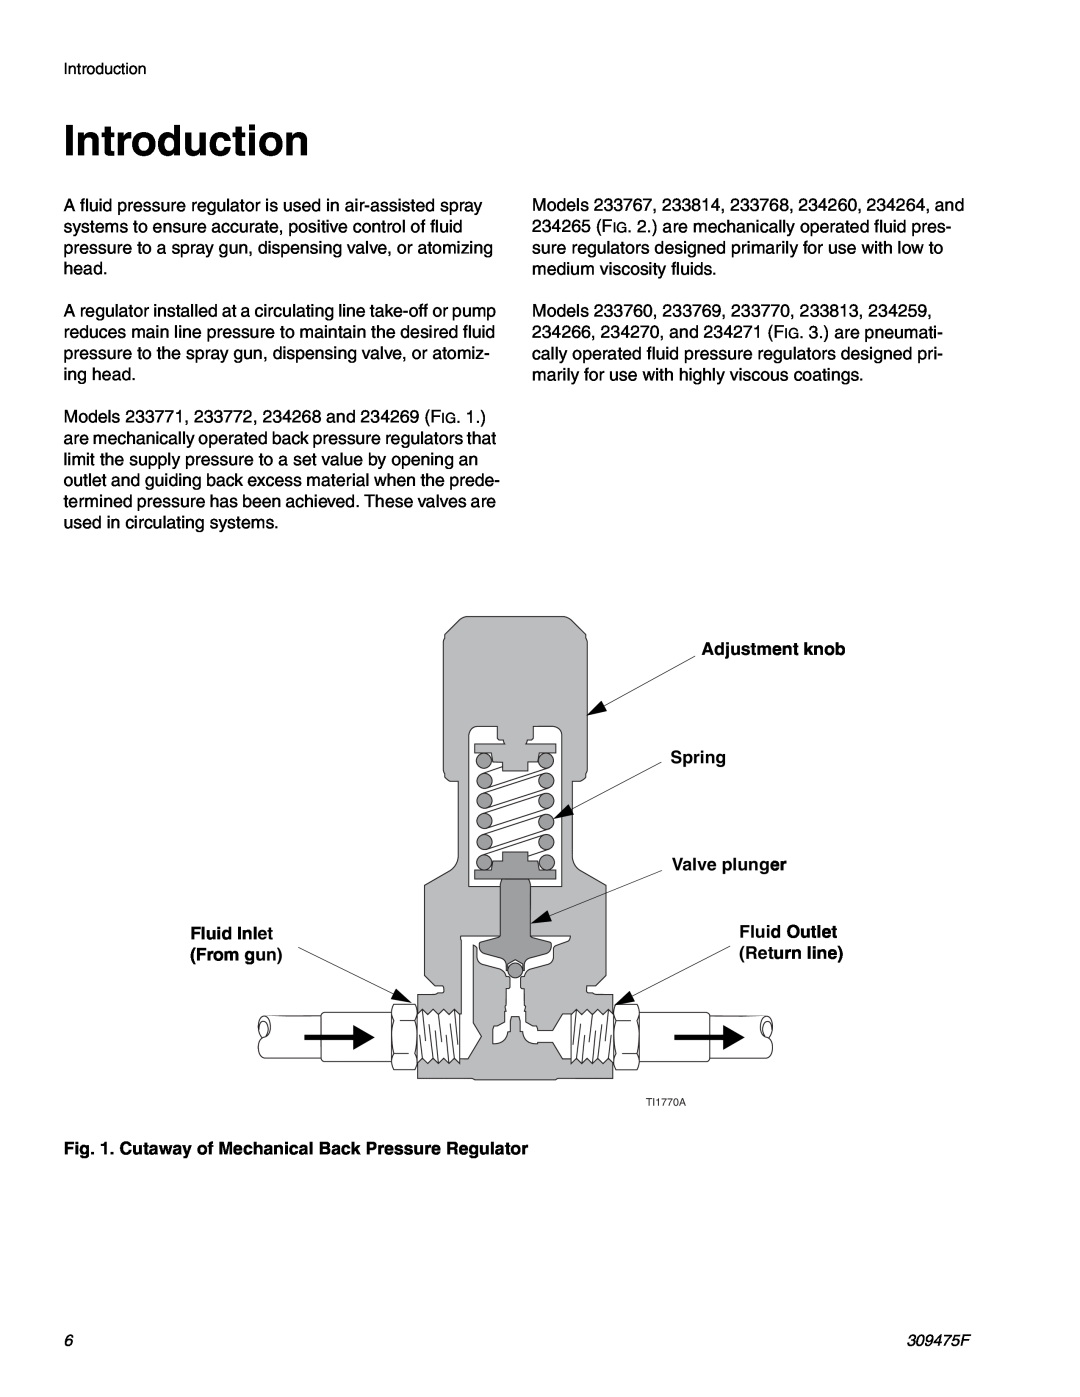 Graco Inc 309475F Introduction, Adjustment knob Spring, Valve plunger, Fluid Inlet, Fluid Outlet, From gun, Return line 